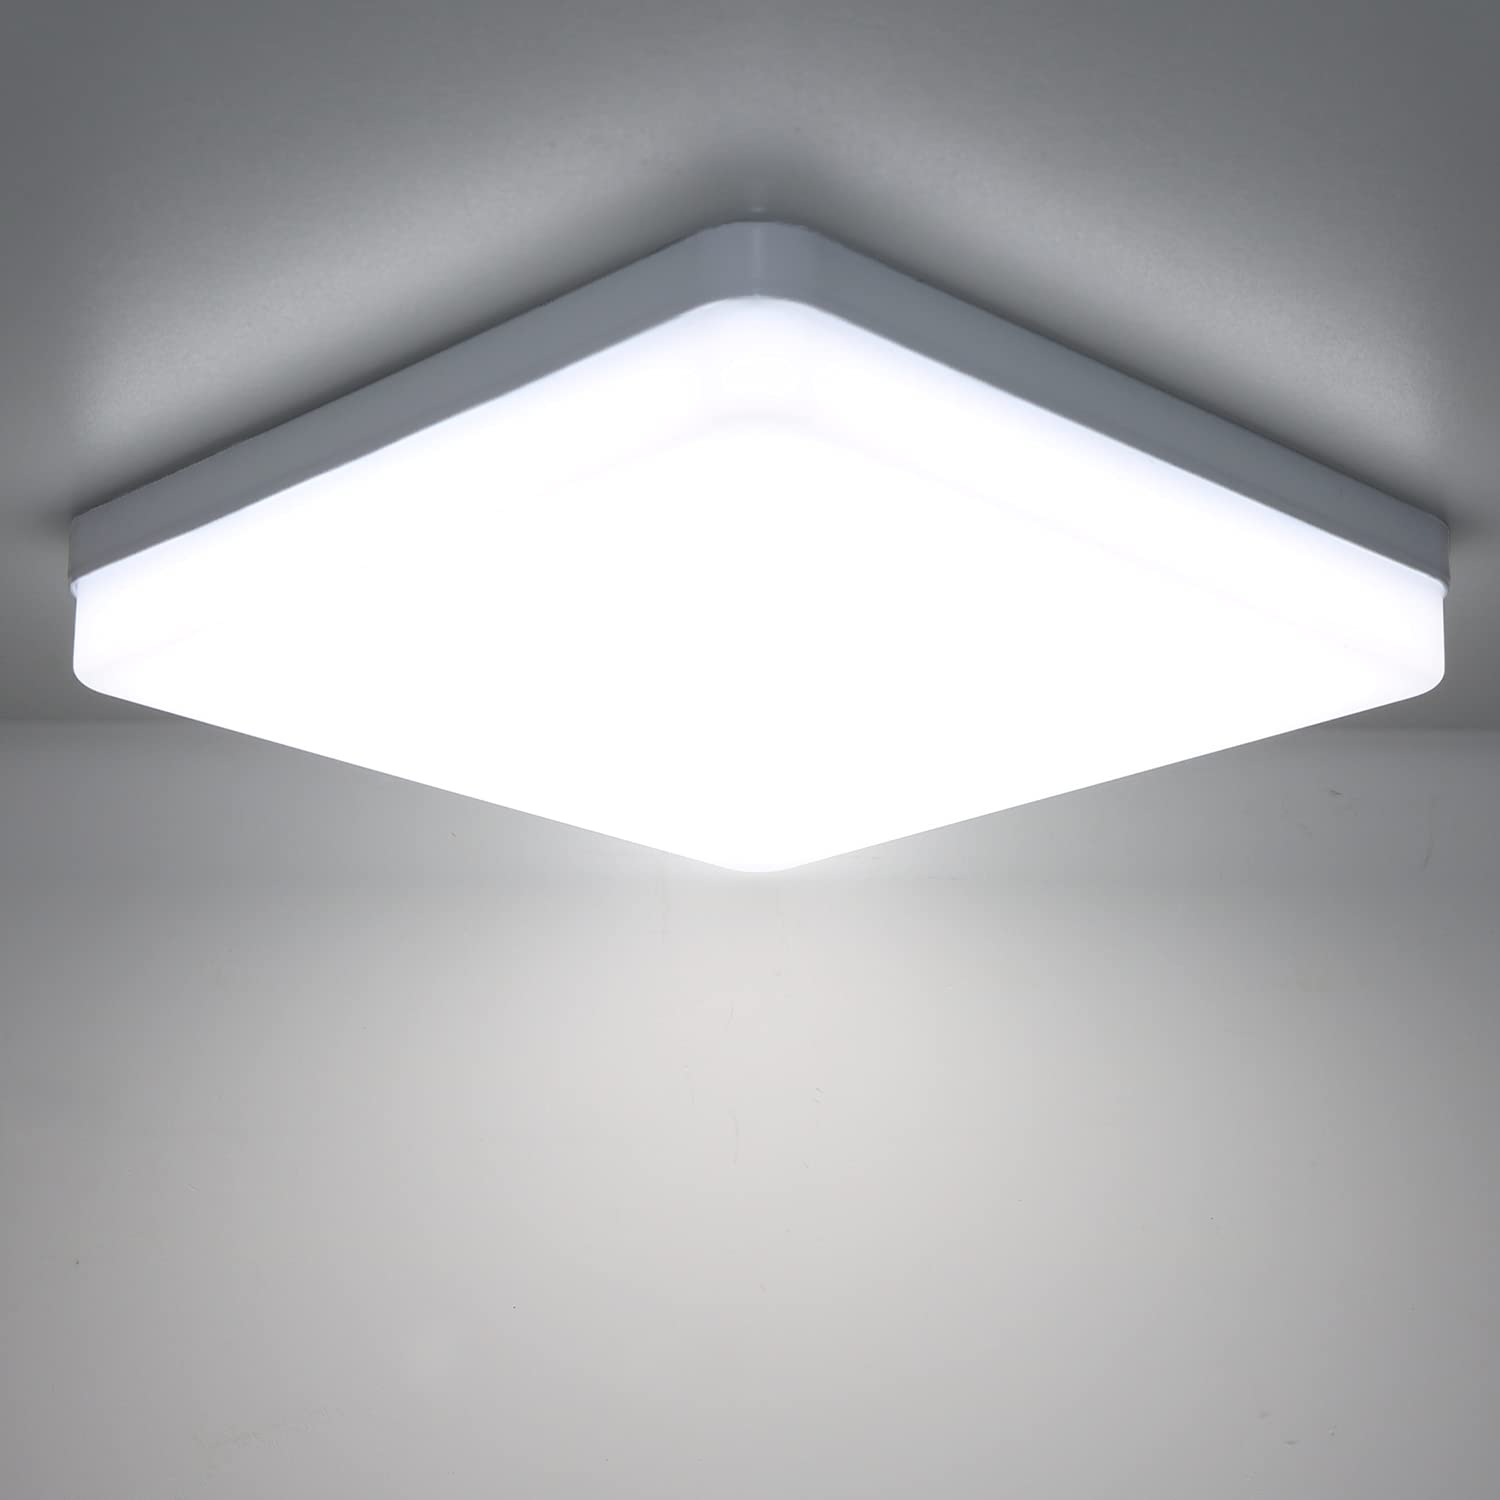 Kimjo LED Ceiling Light 36W Daylight White 6500K, Ceiling Lamp Square for Bathroom, Modern Ceiling Light 3240LM Ideal for Bedroom Kitchen Living Room Dining Room Hallway